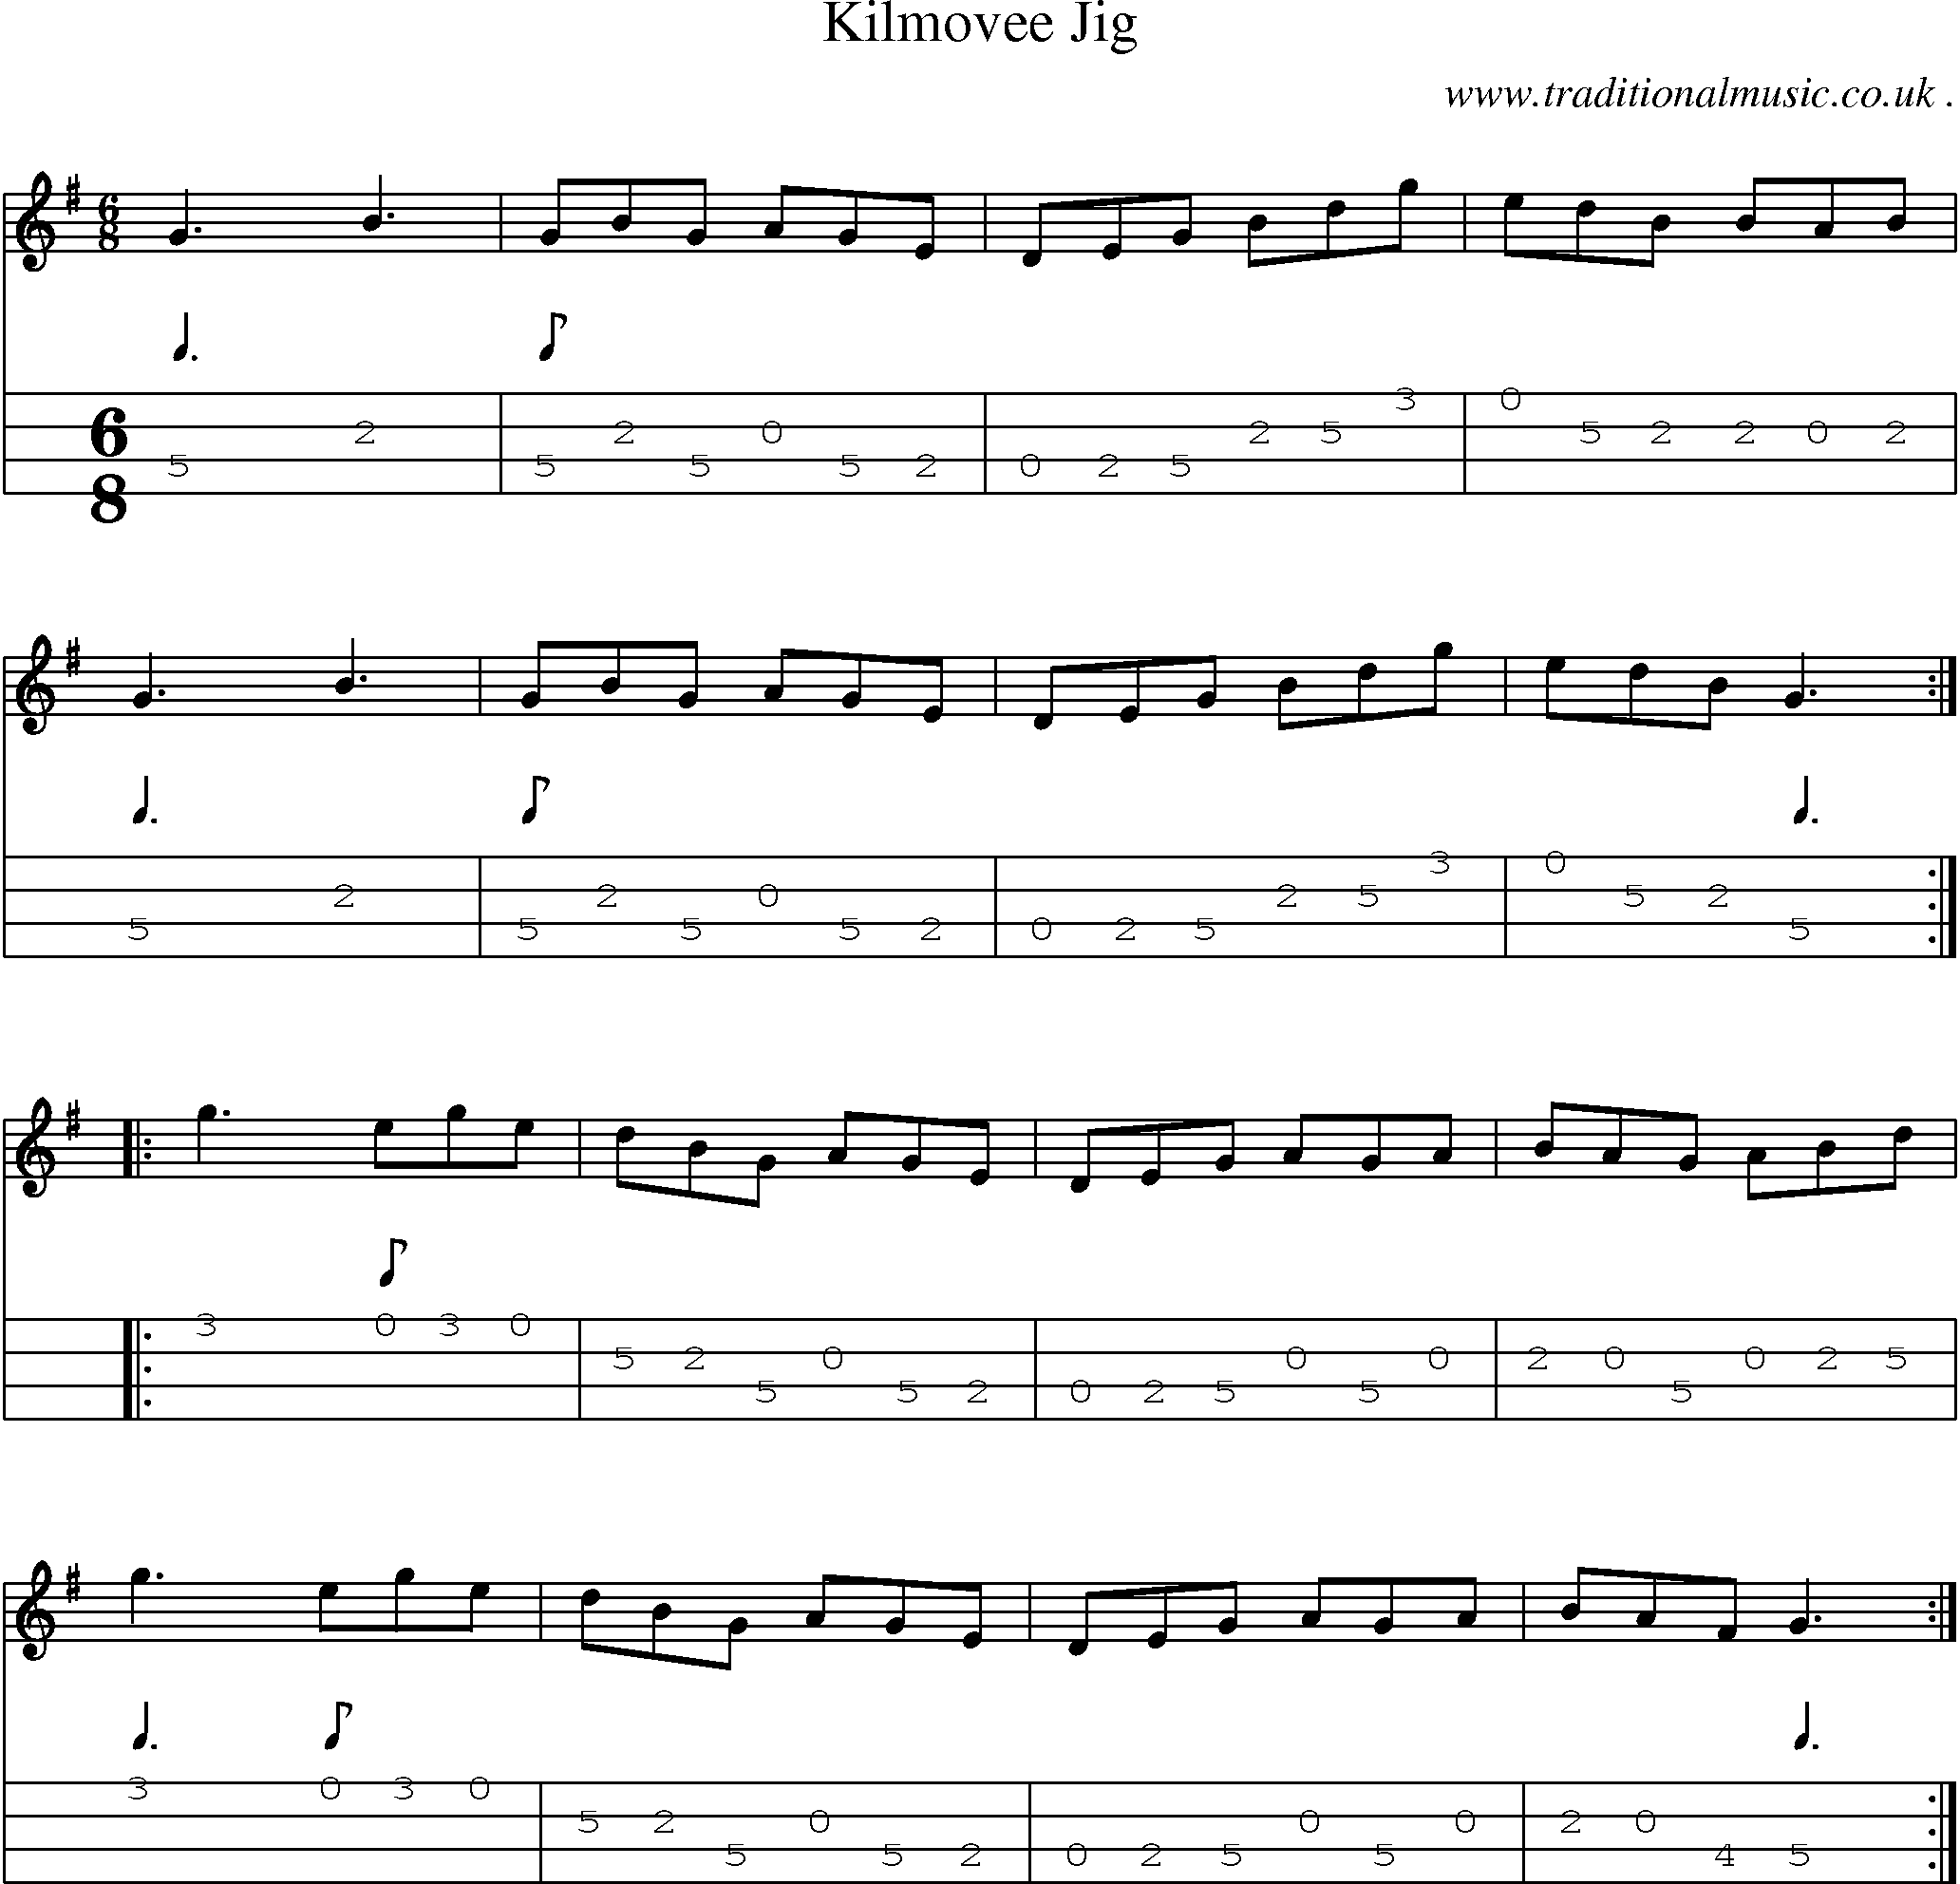 Sheet-Music and Mandolin Tabs for Kilmovee Jig